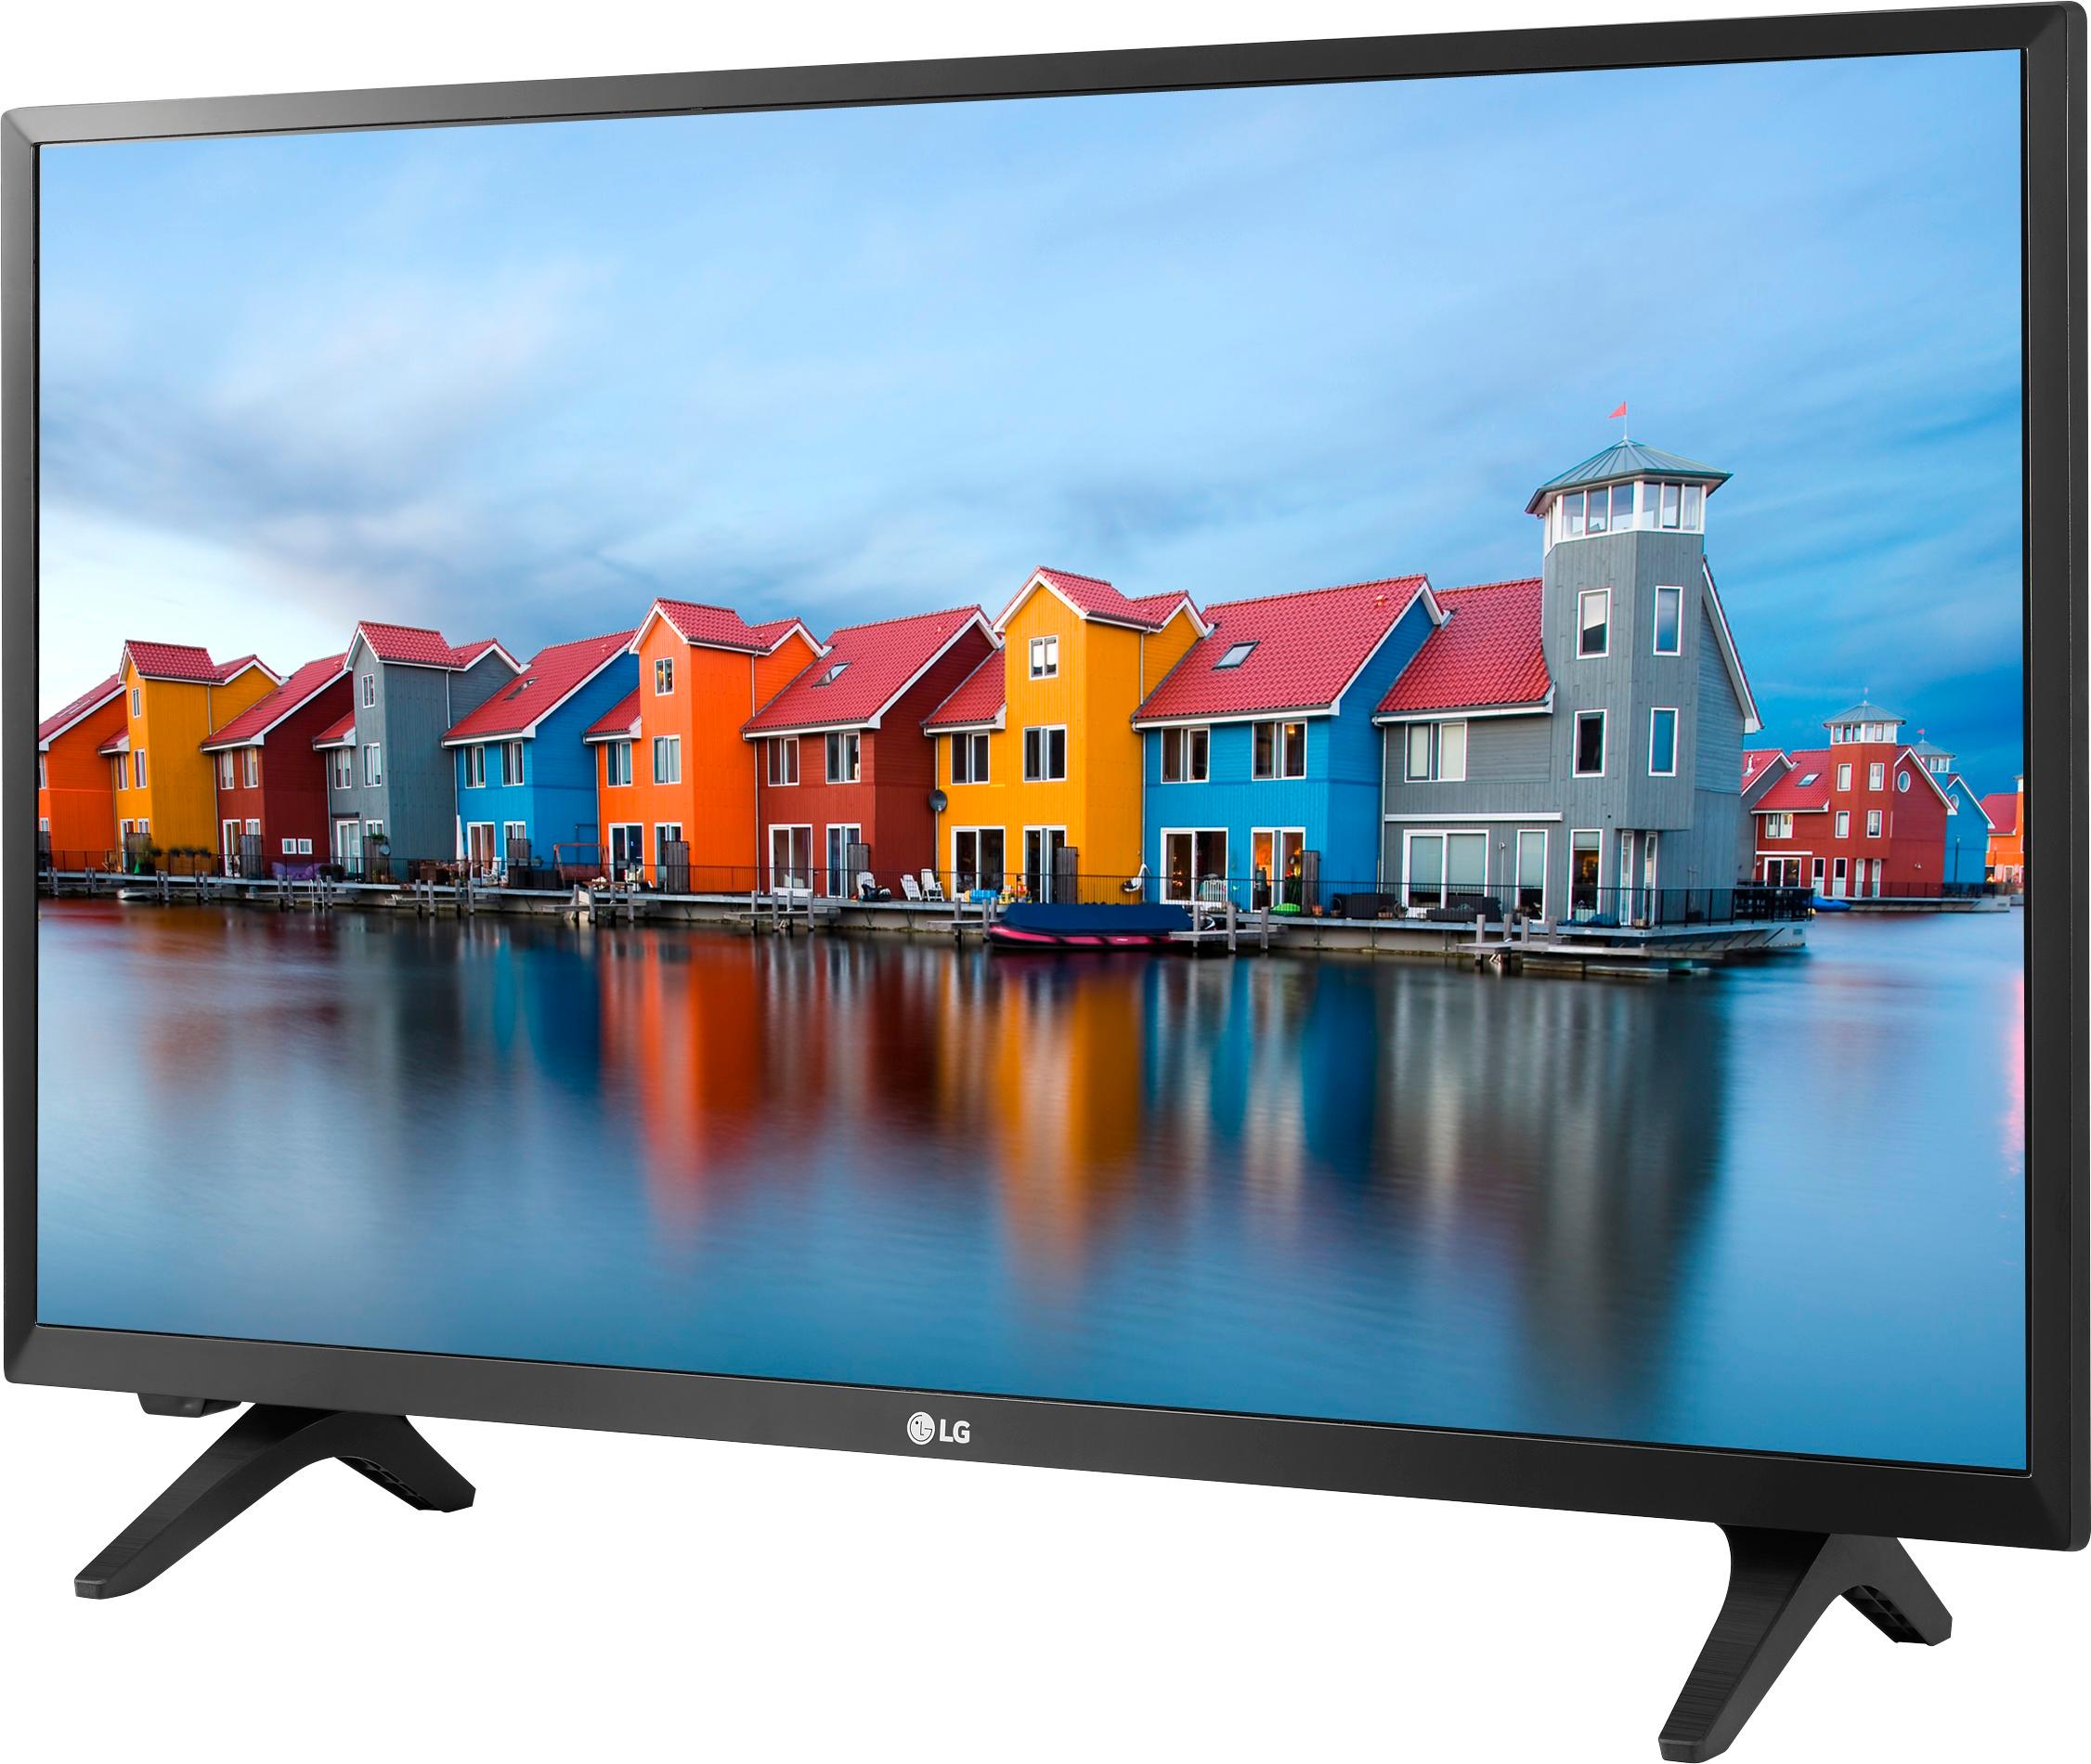 muur zaad Alstublieft Best Buy: LG 28" Class LED 720p HDTV 28LJ400B-PU